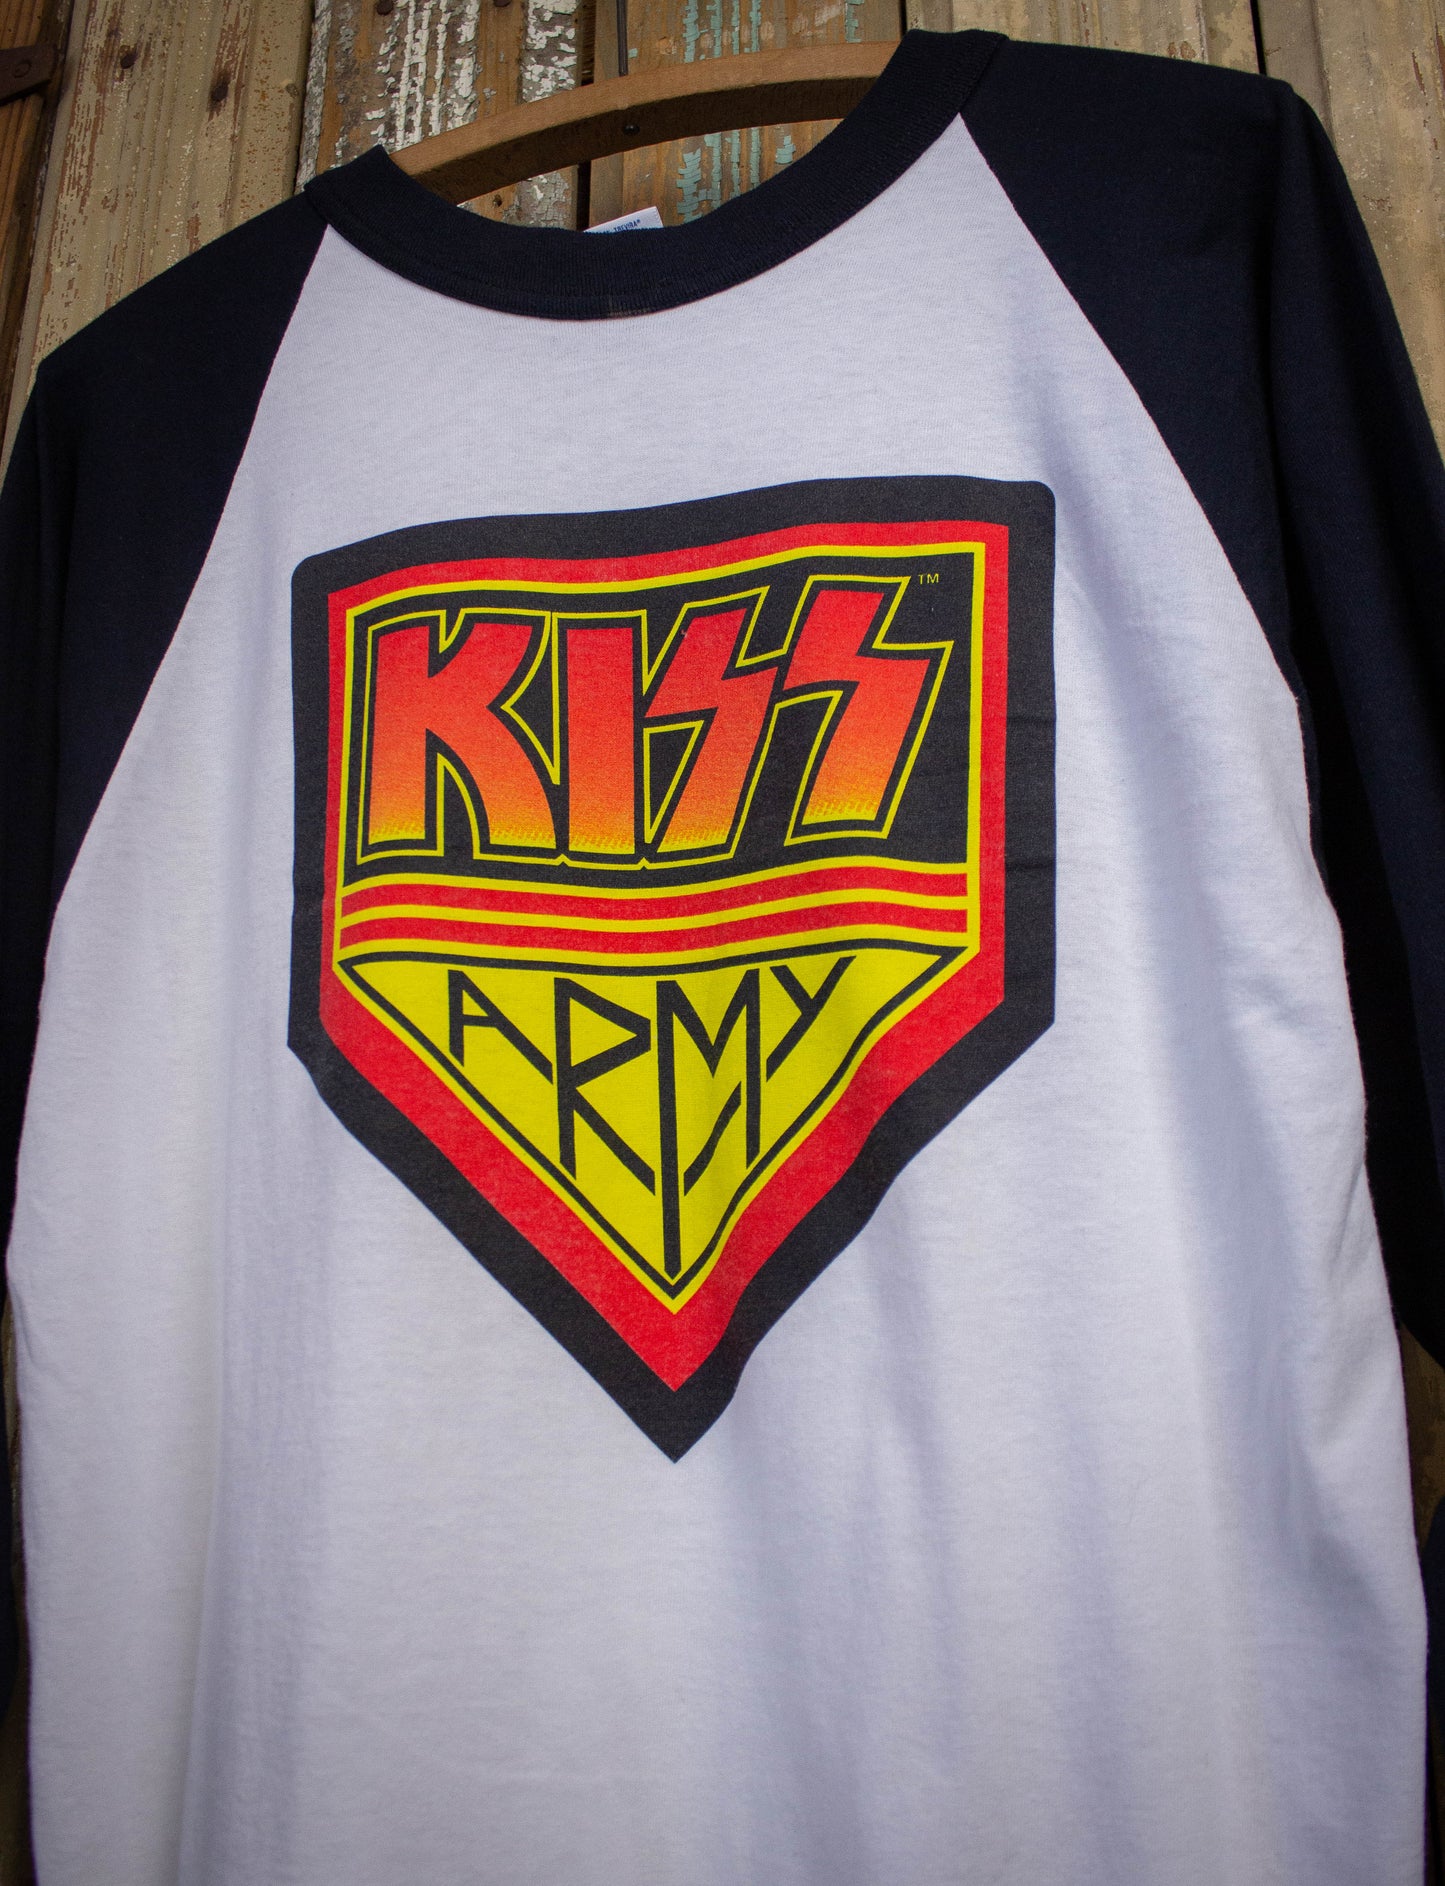 Vintage Kiss Army Alive Tour Raglan Concert T Shirt 1997 White and Black XL